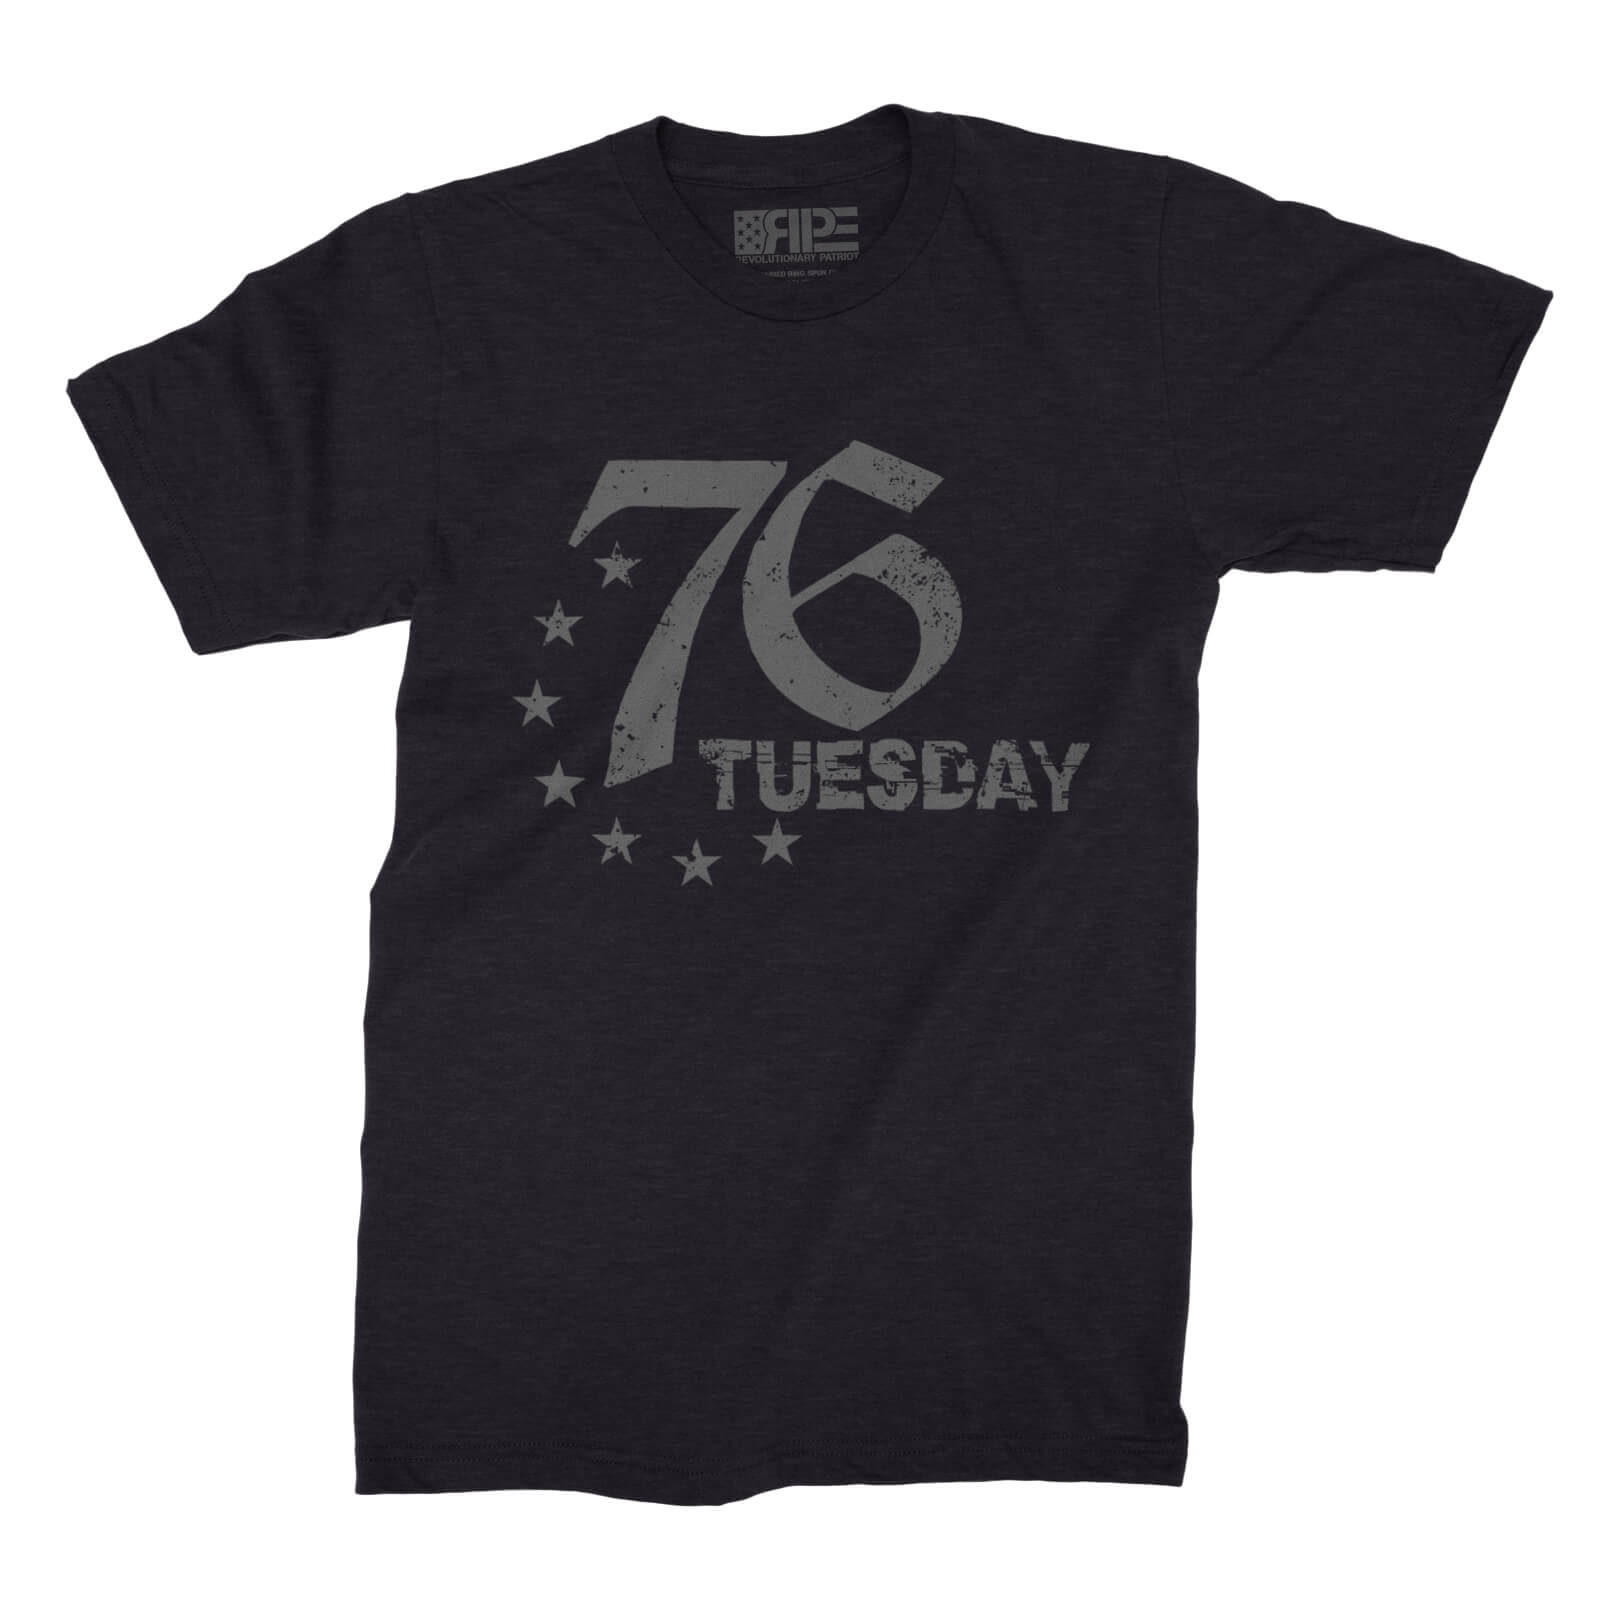 76 Tuesday (Black Heather) - Revolutionary Patriot